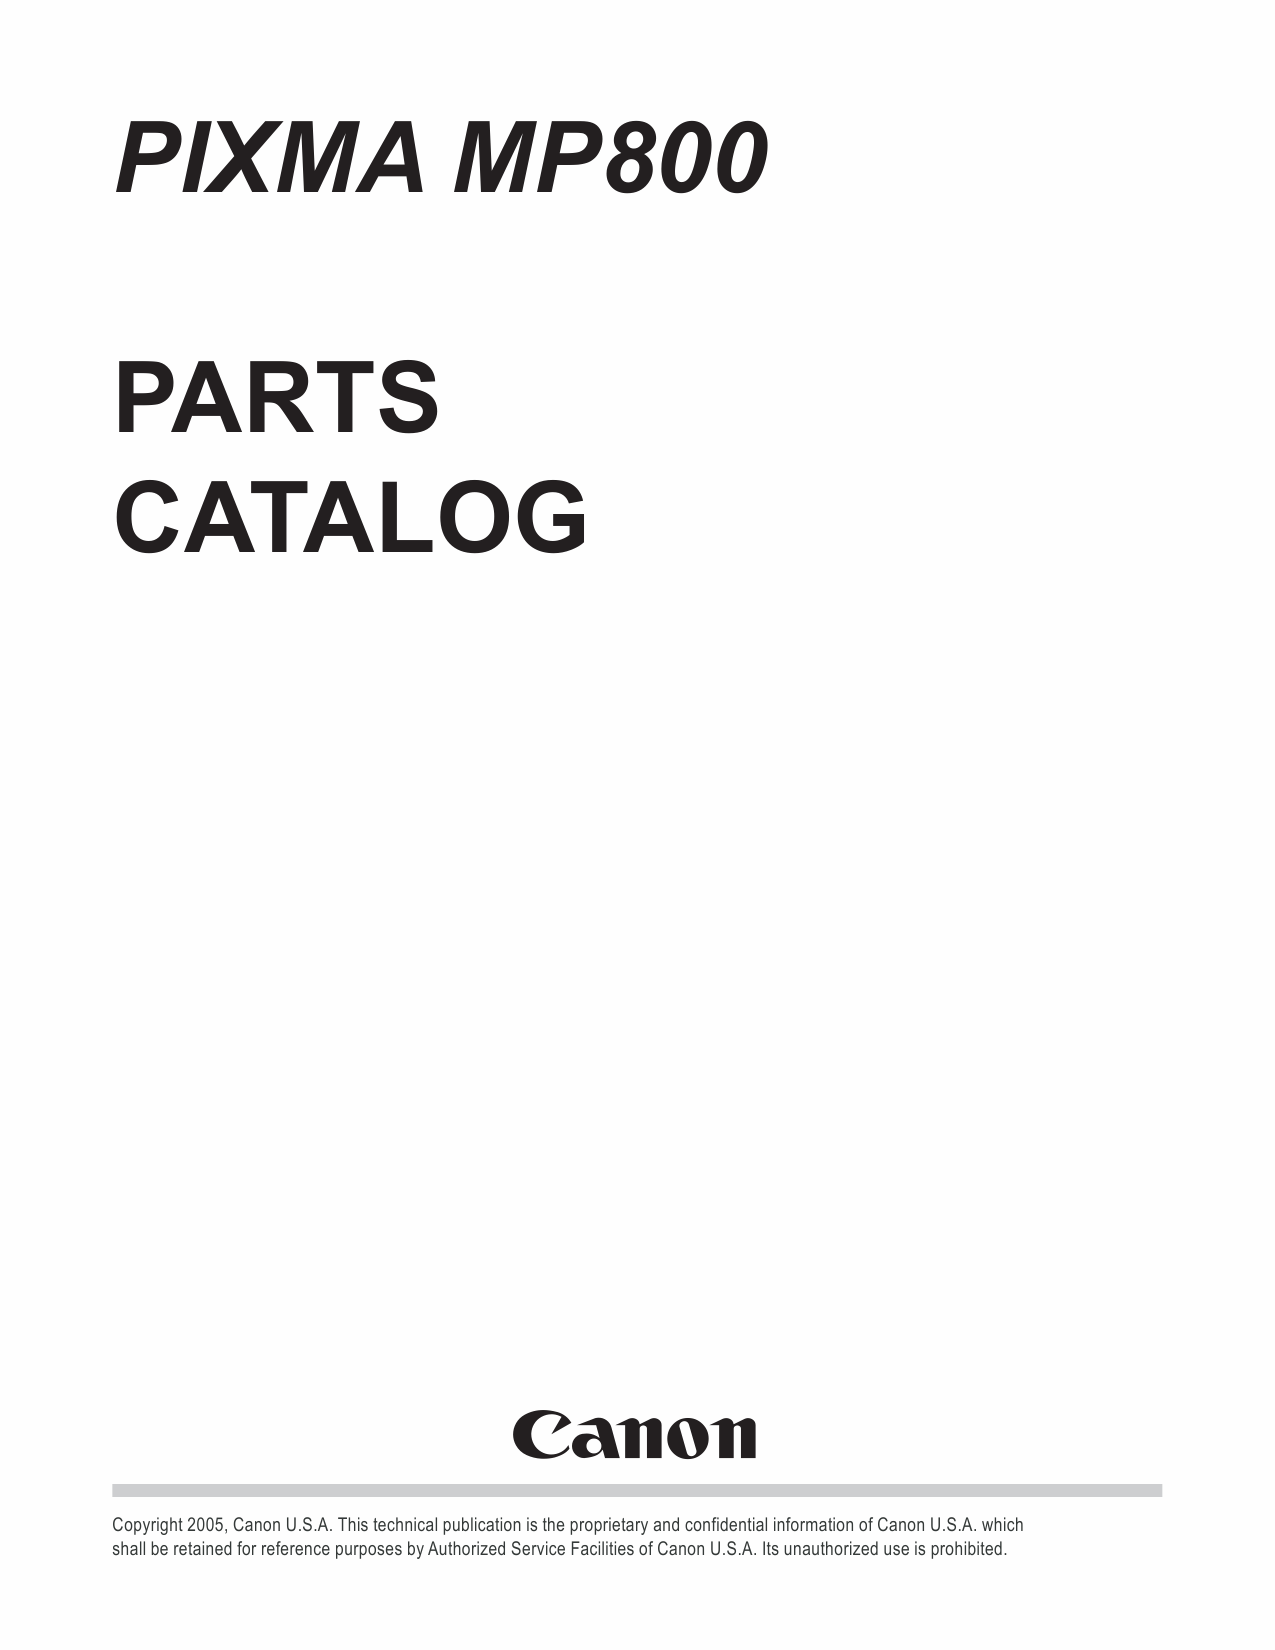 Canon PIXMA MP800 Parts Catalog Manual-1